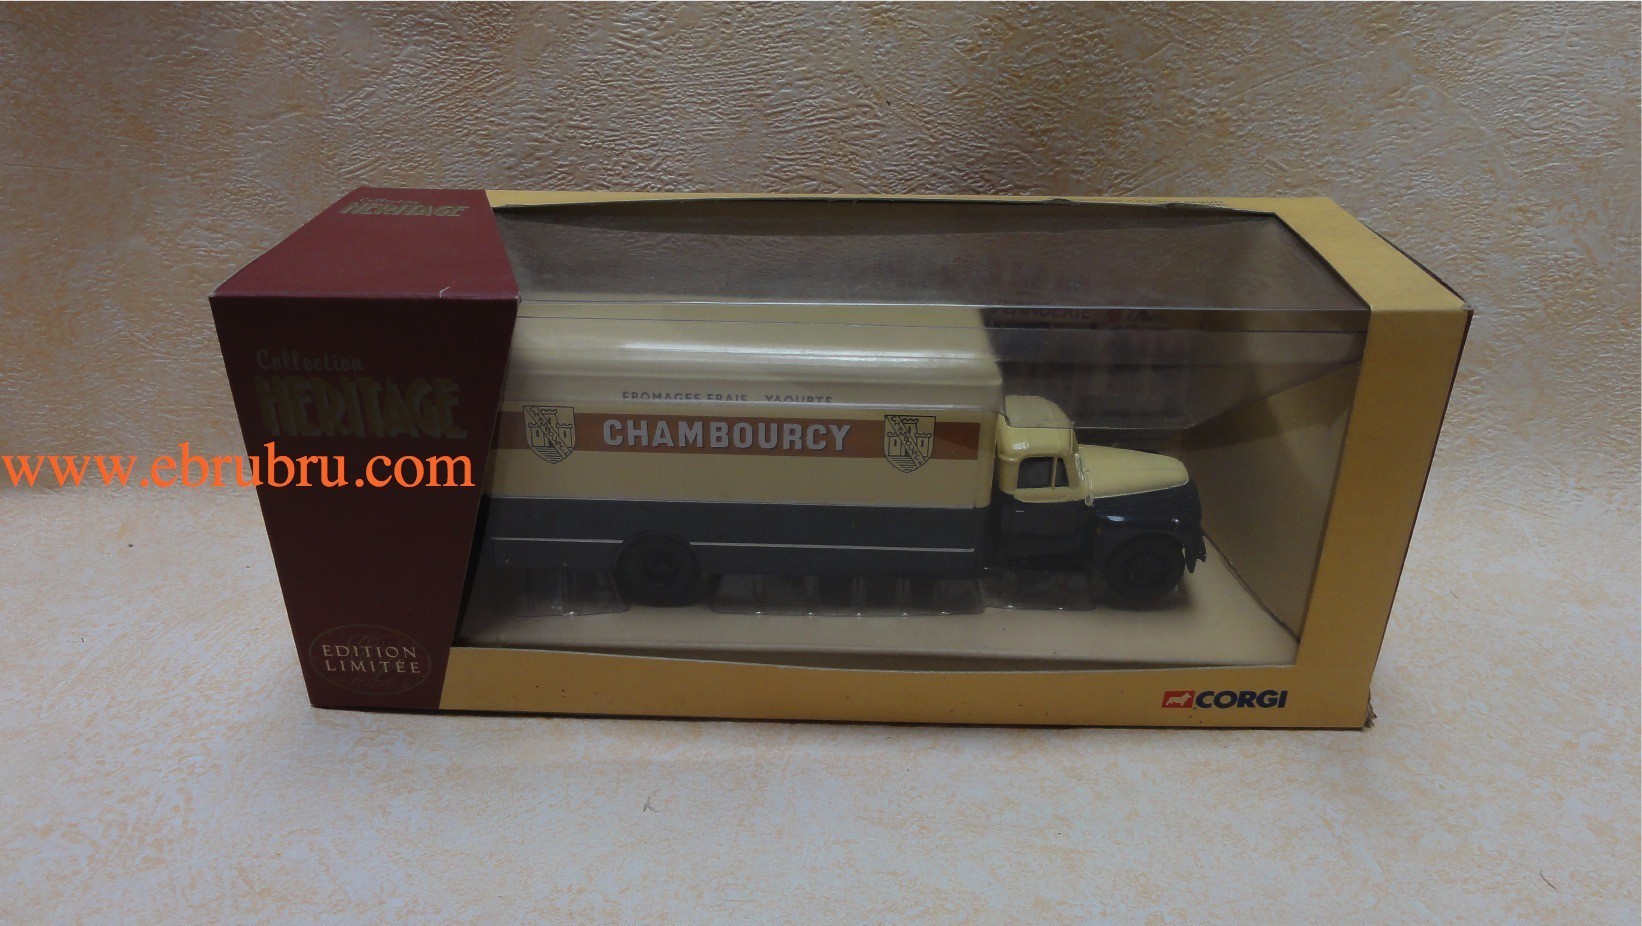 Citroen type 55 Fourgon Chambourcy Collection Heritage Corgi ref 74103